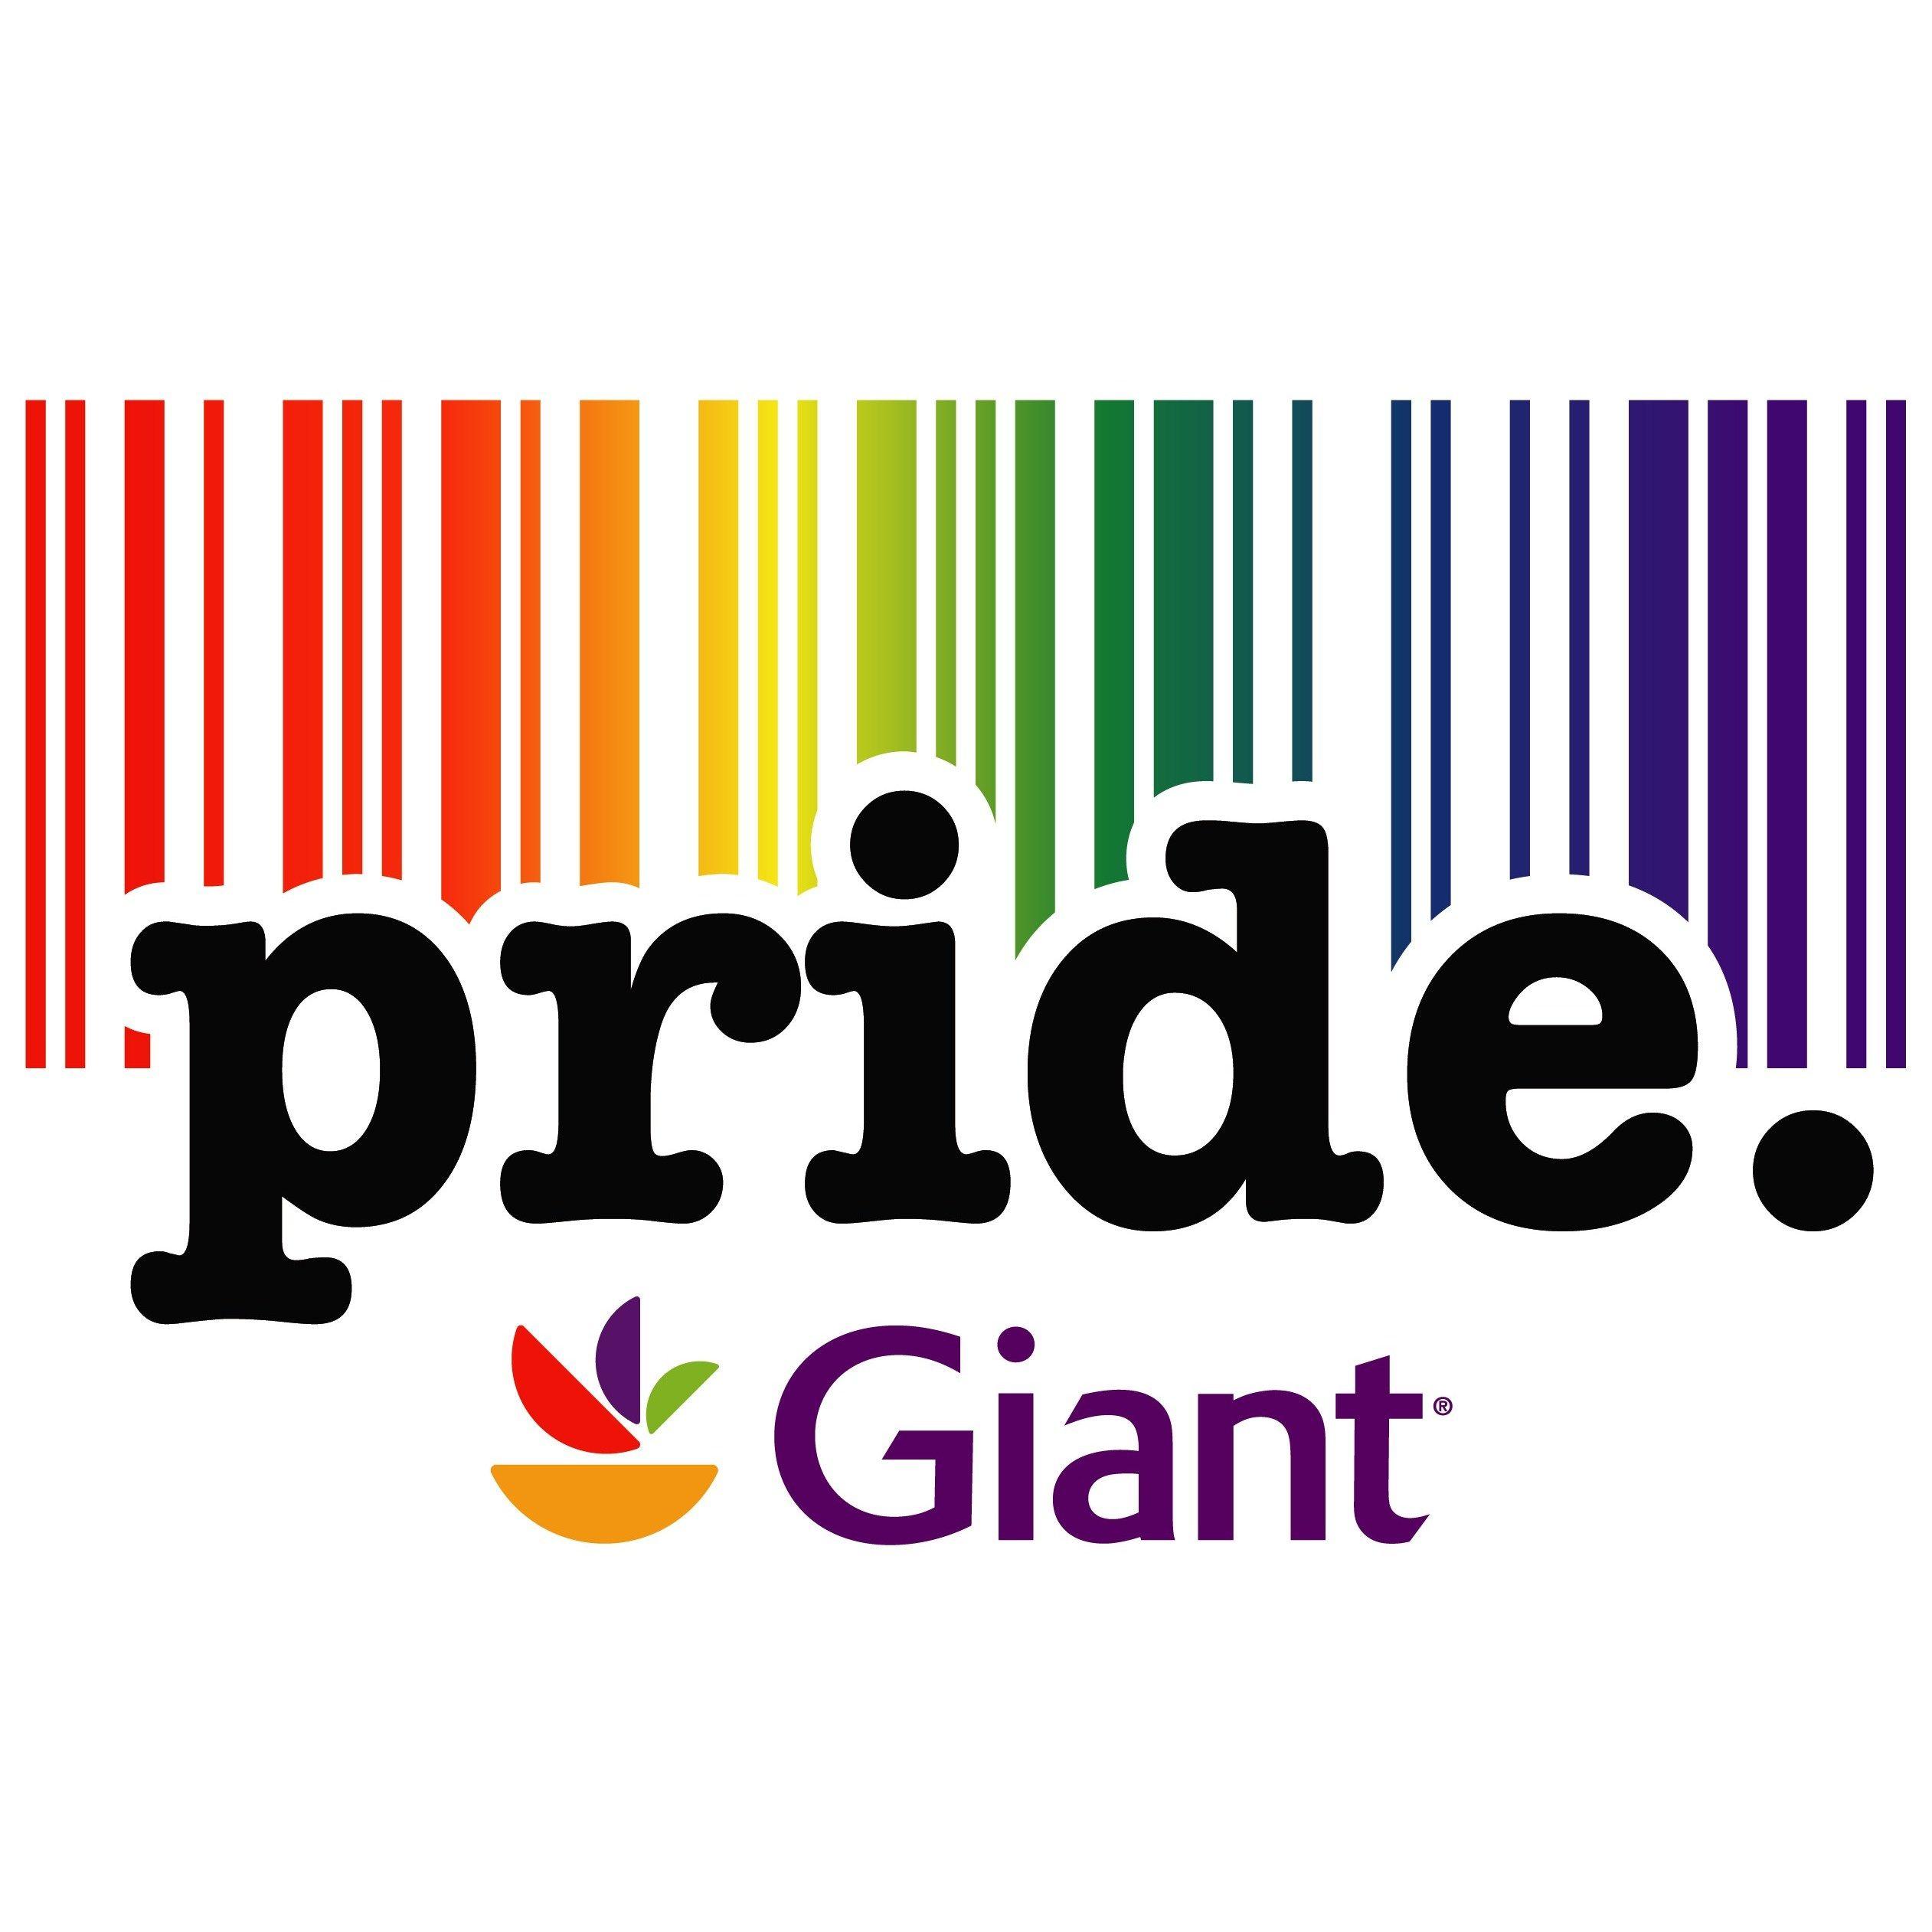 LGBTQ Logo - Giant Food Celebrates the LGBTQ Community with a new Rainbow logo ...